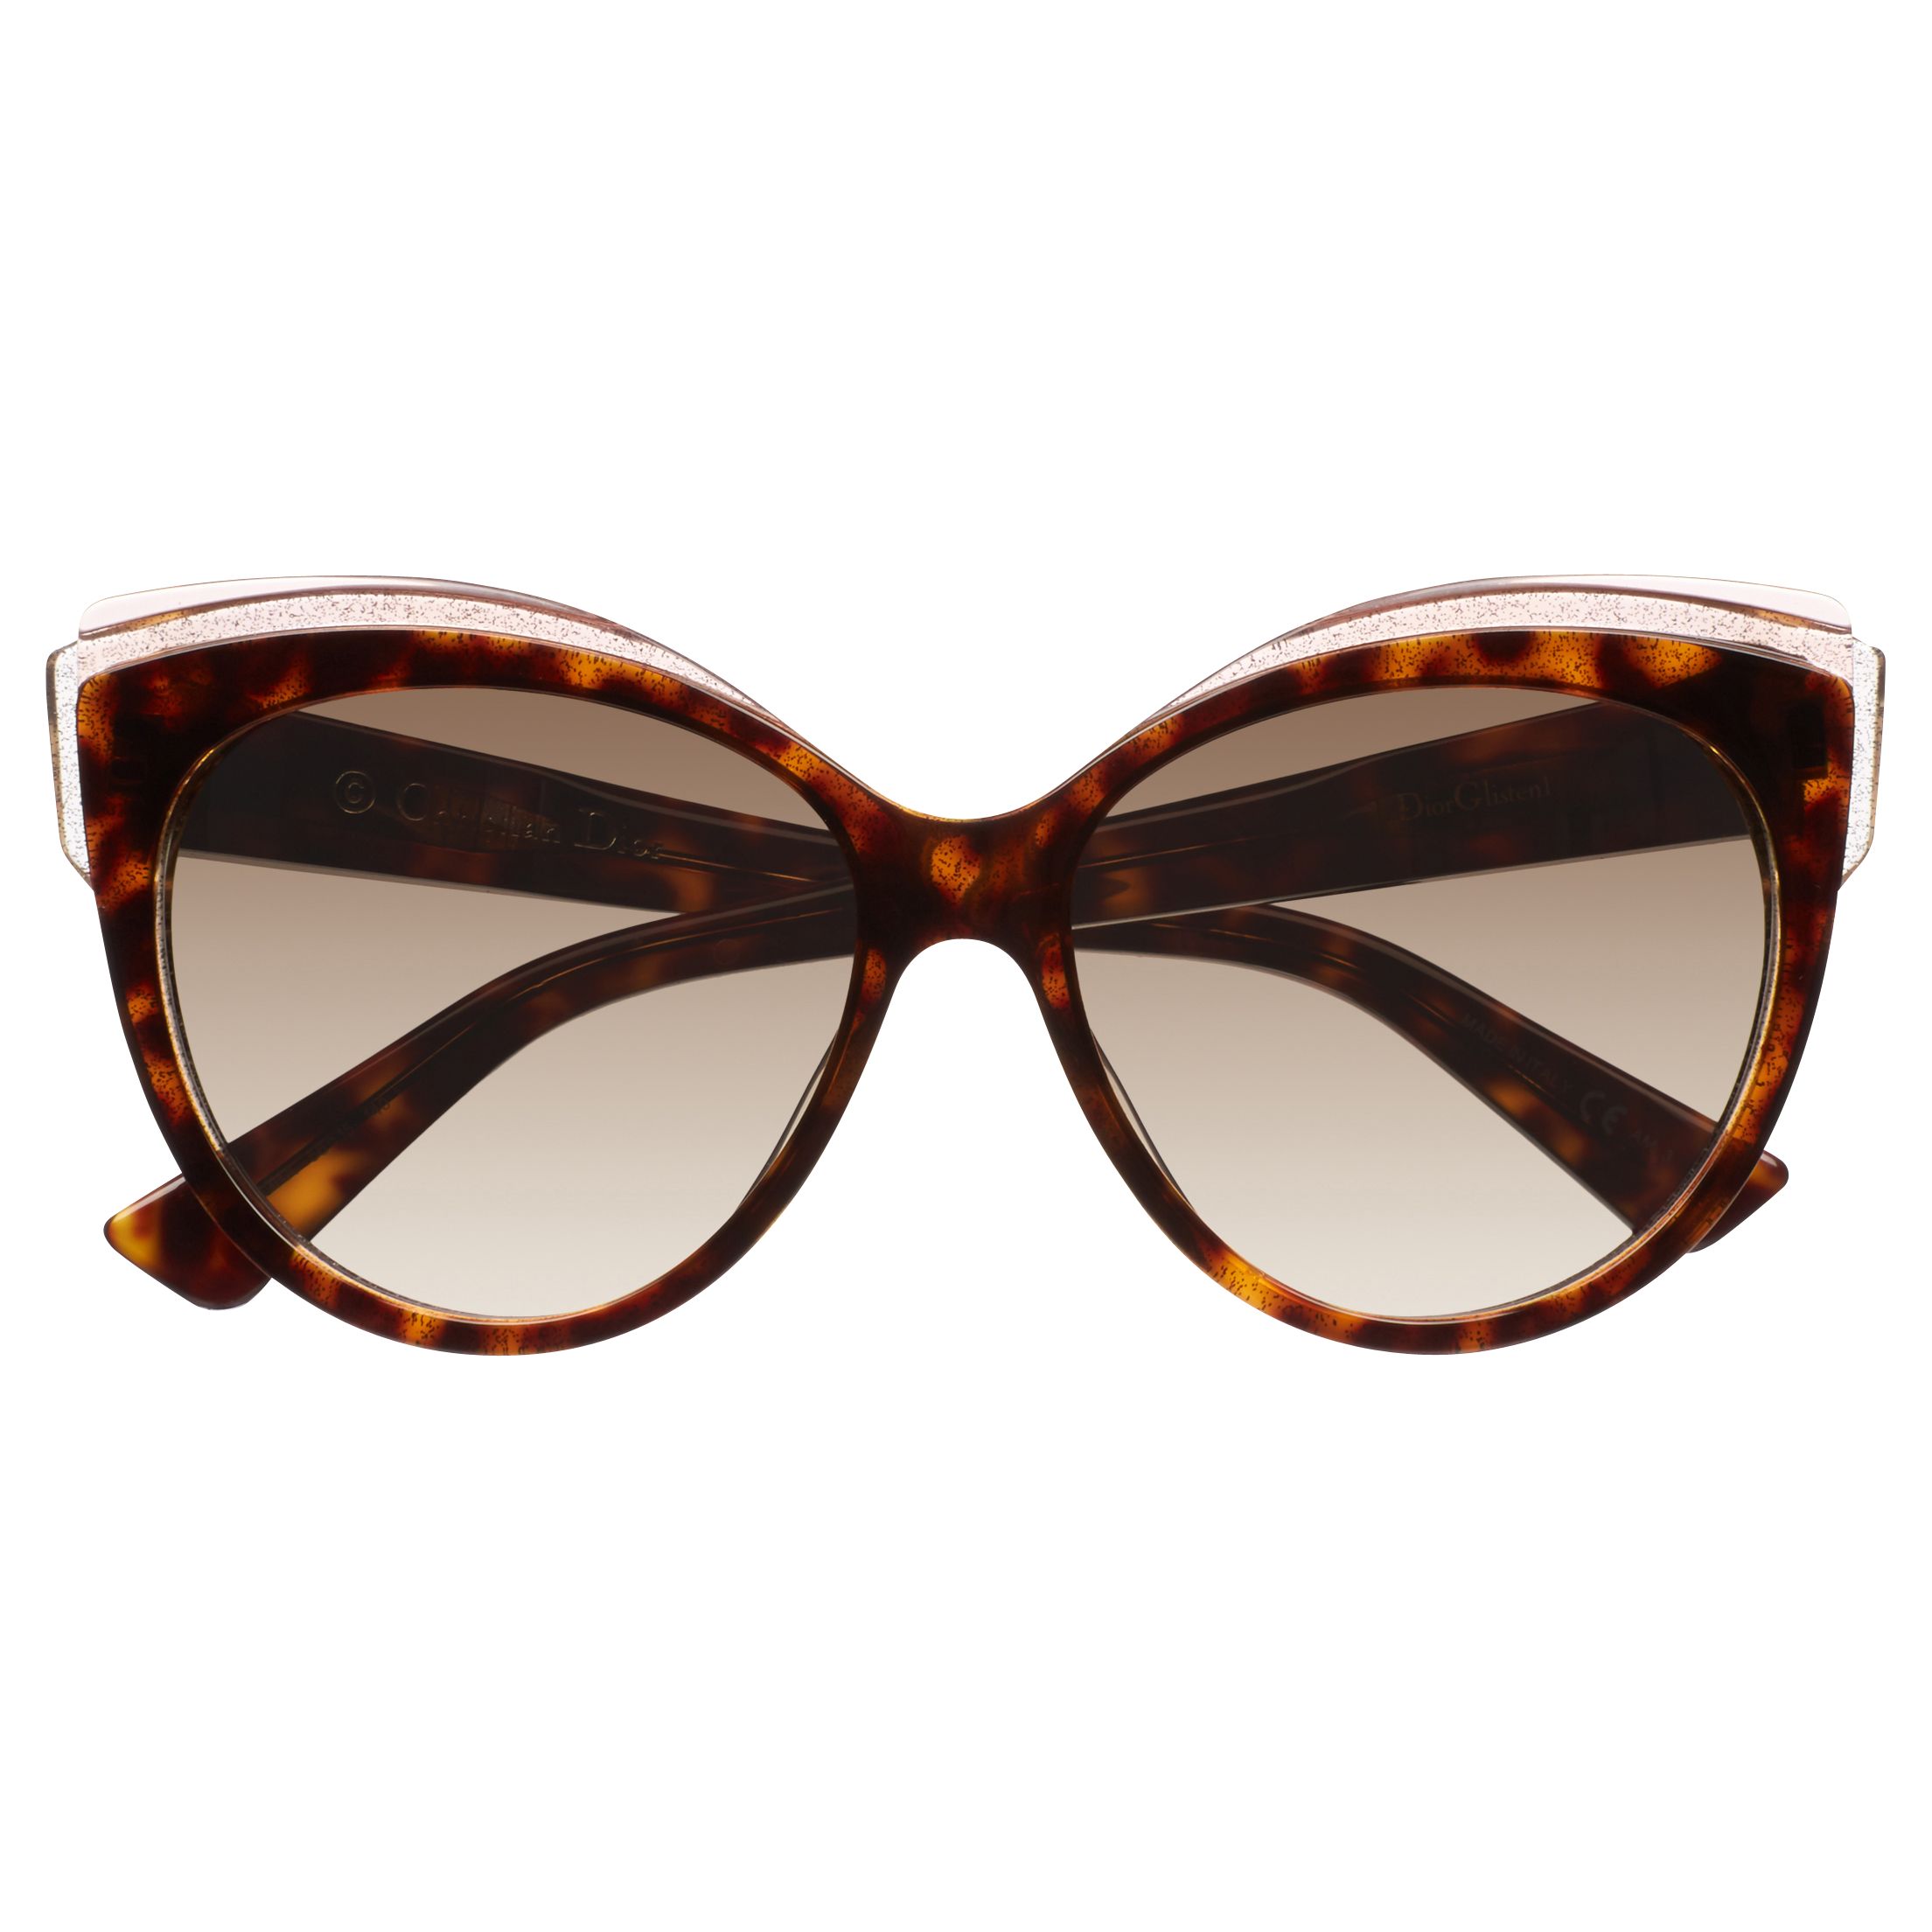 Christian Dior Glisten 1 Cat S Eye Plastic Frame Sunglasses At John Lewis And Partners